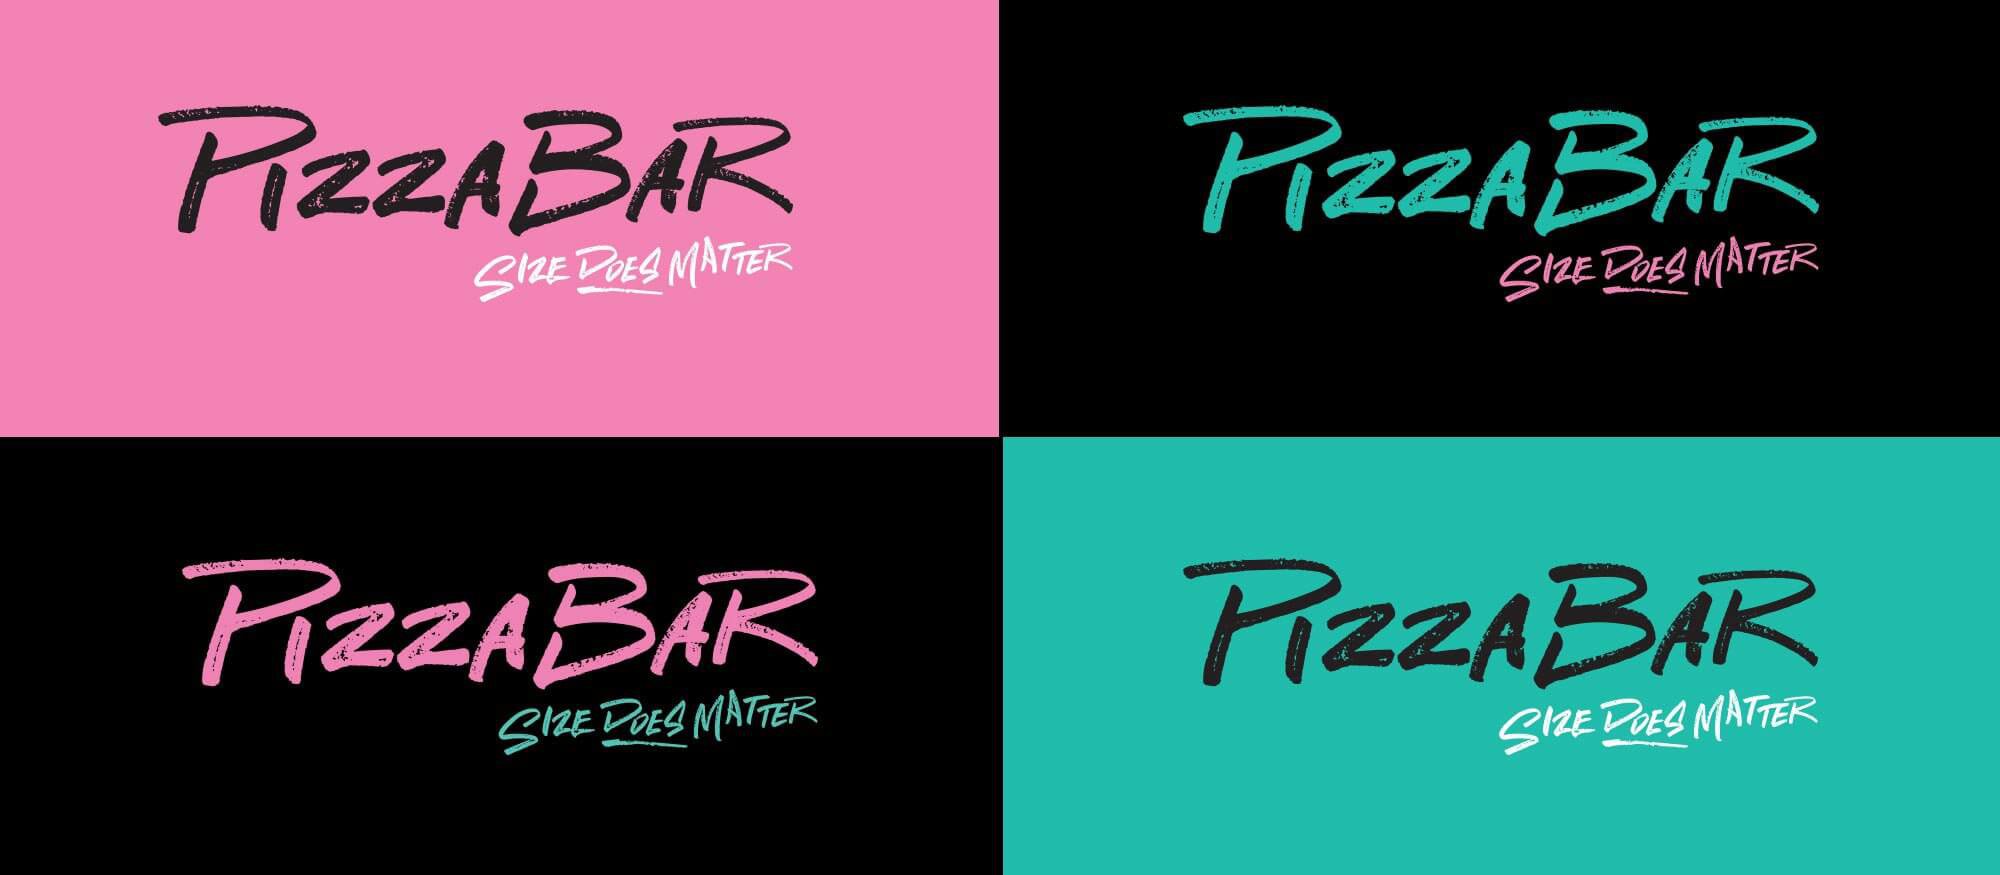 Pizza Bar branded logo design by Jacober Creative